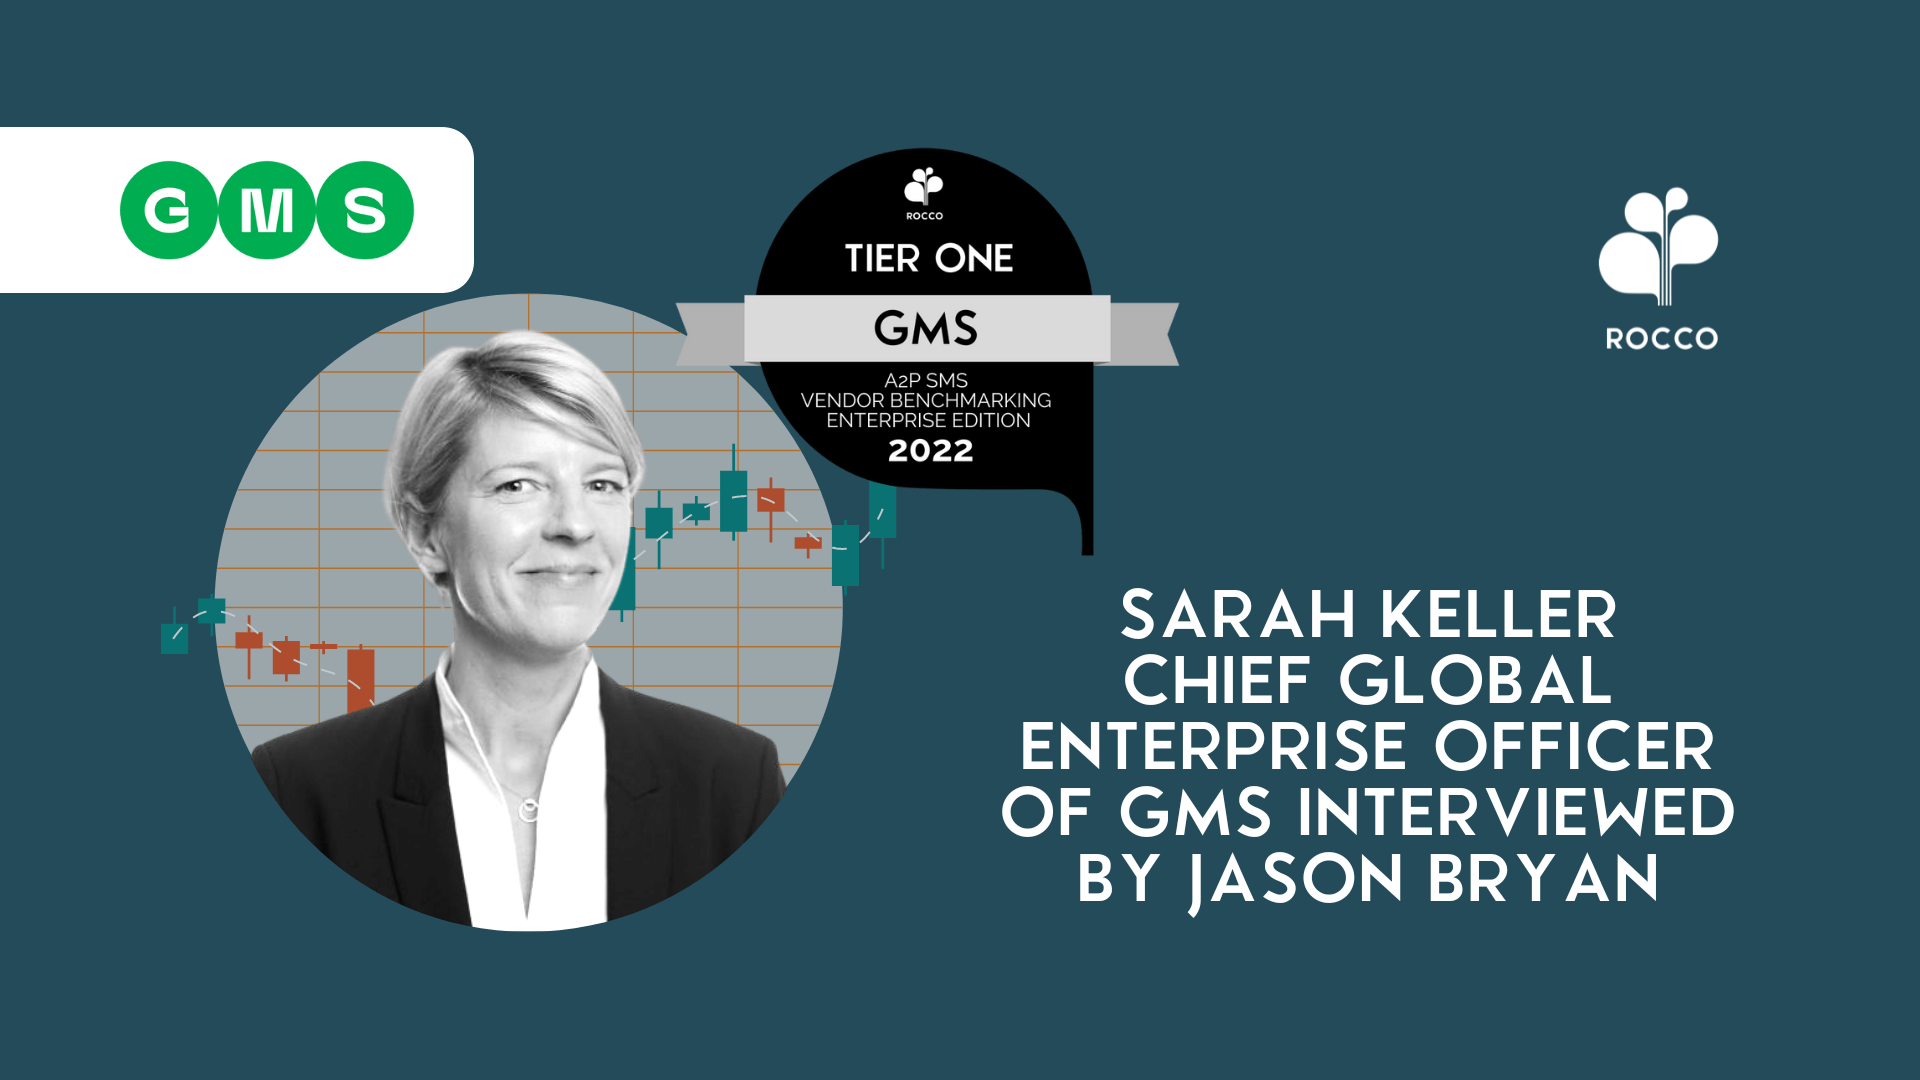 Sarah Keller, Chief Global Enterprise Officer of GMS interviewed by Jason Bryan